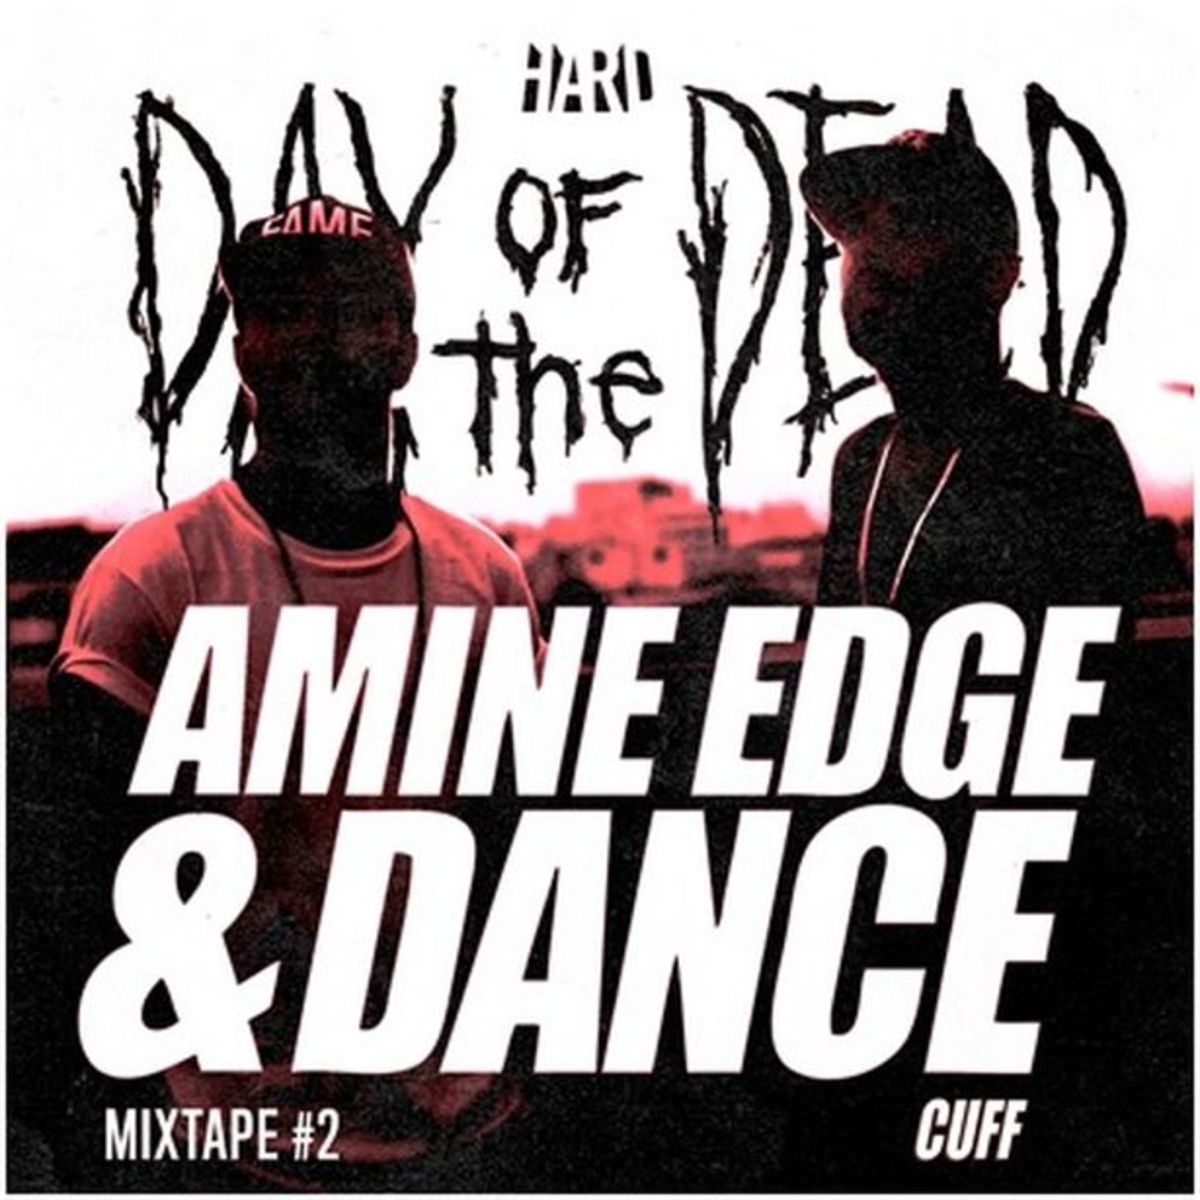 EDM Download: HARD Day Of The Dead Mixtape #2: Amine Edge & DANCE